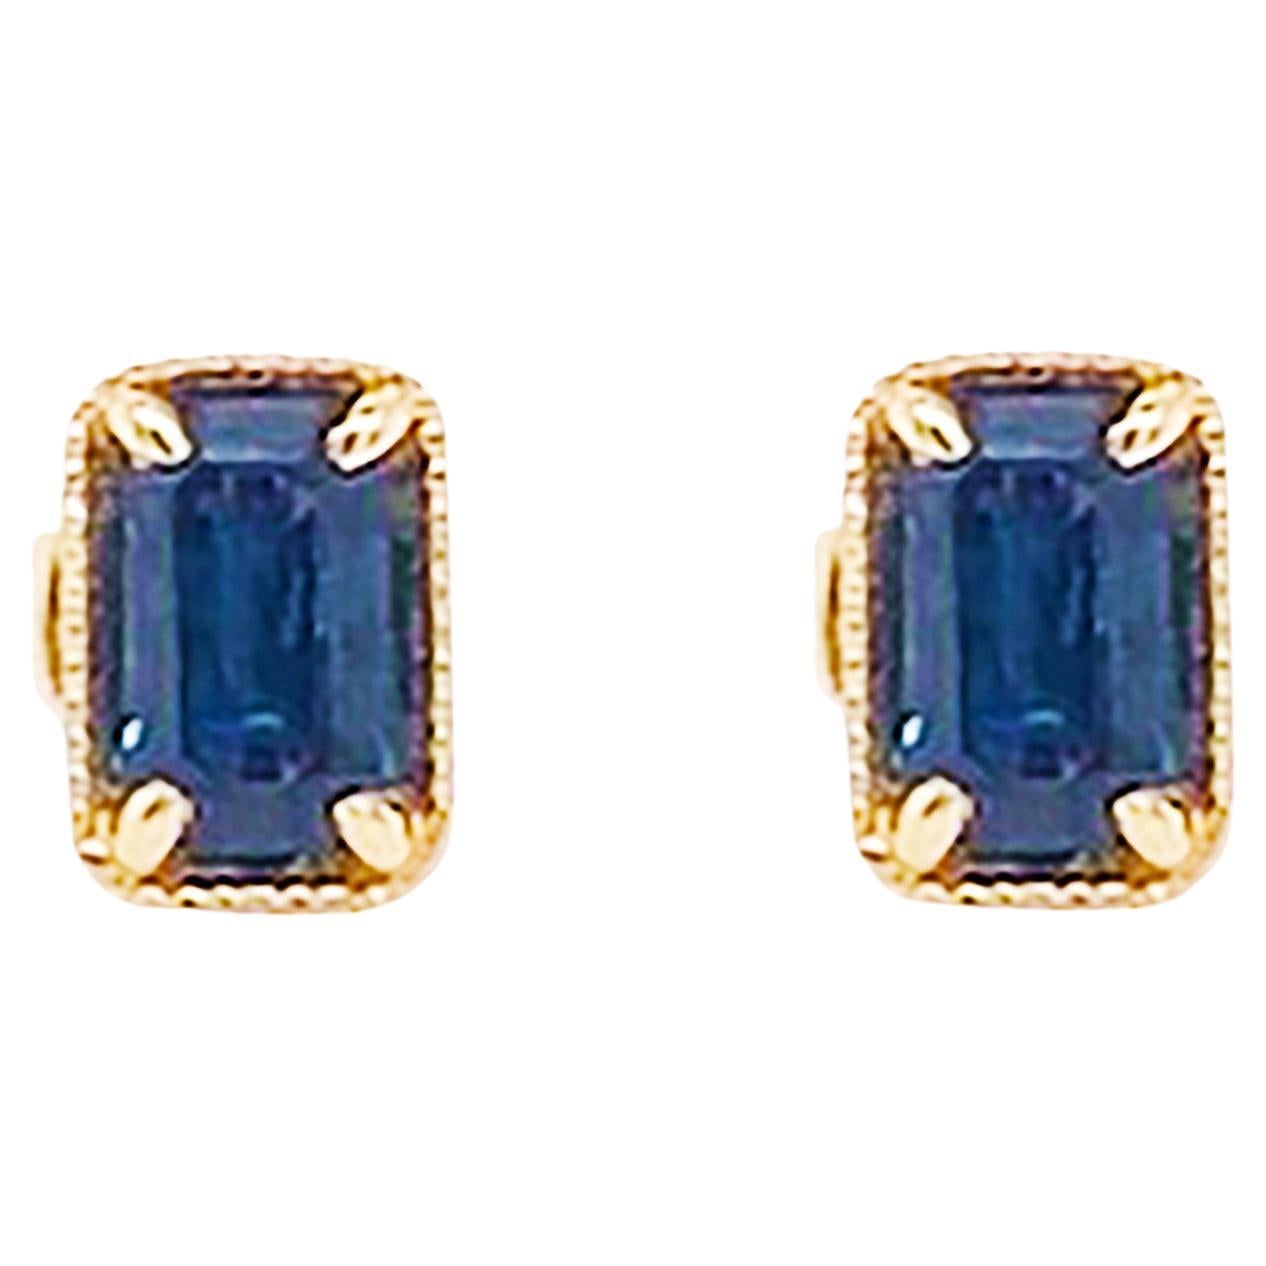 Sapphire Stud Earrings 14K Gold .80 Carat Emerald Cut Sapphire September Earring For Sale